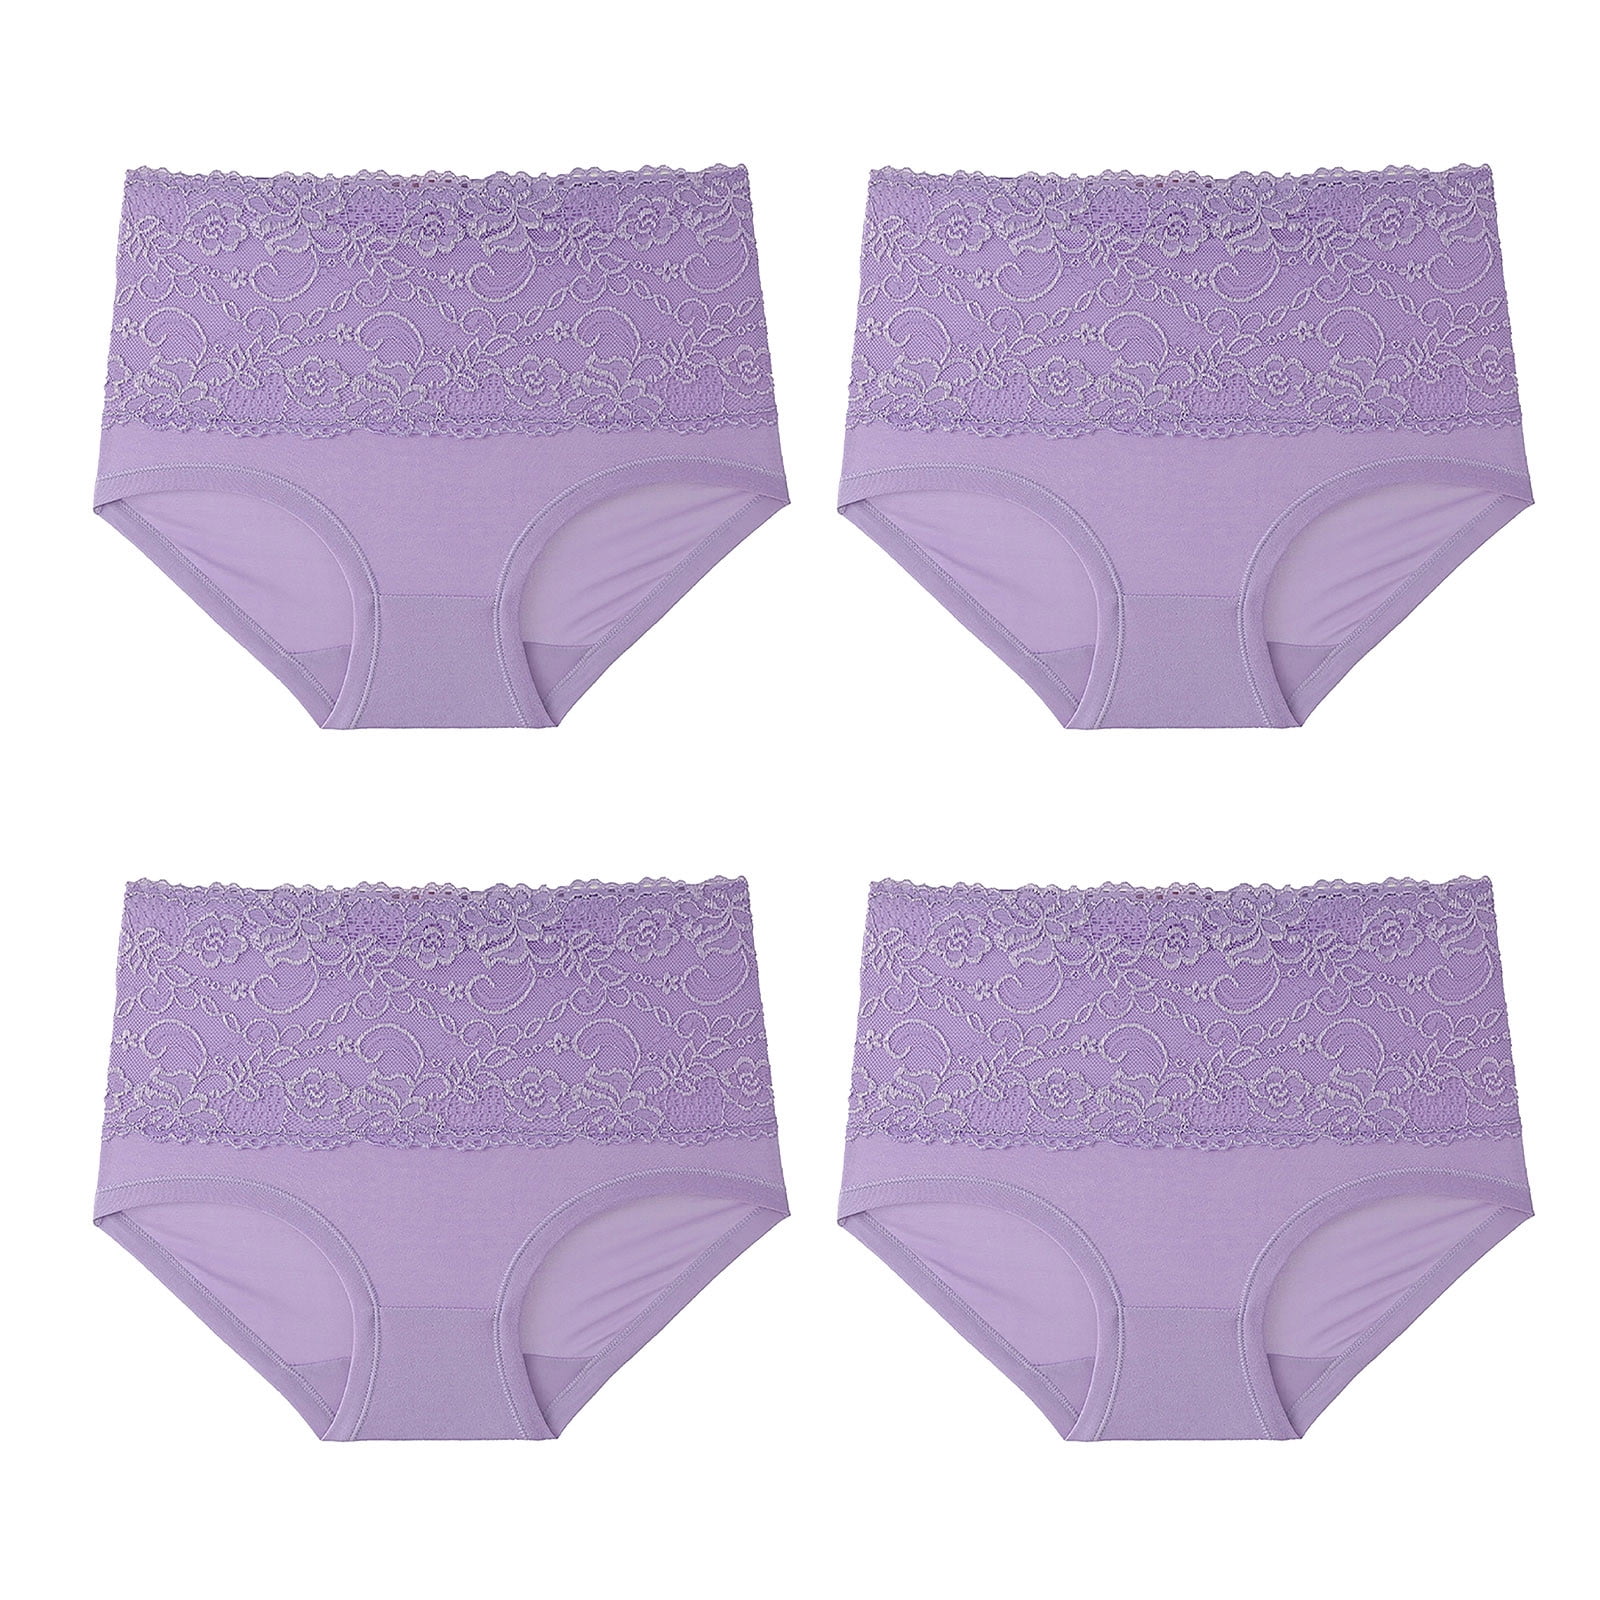 DORKASM Period Underwear for Women Heavy Breathable Menstrual